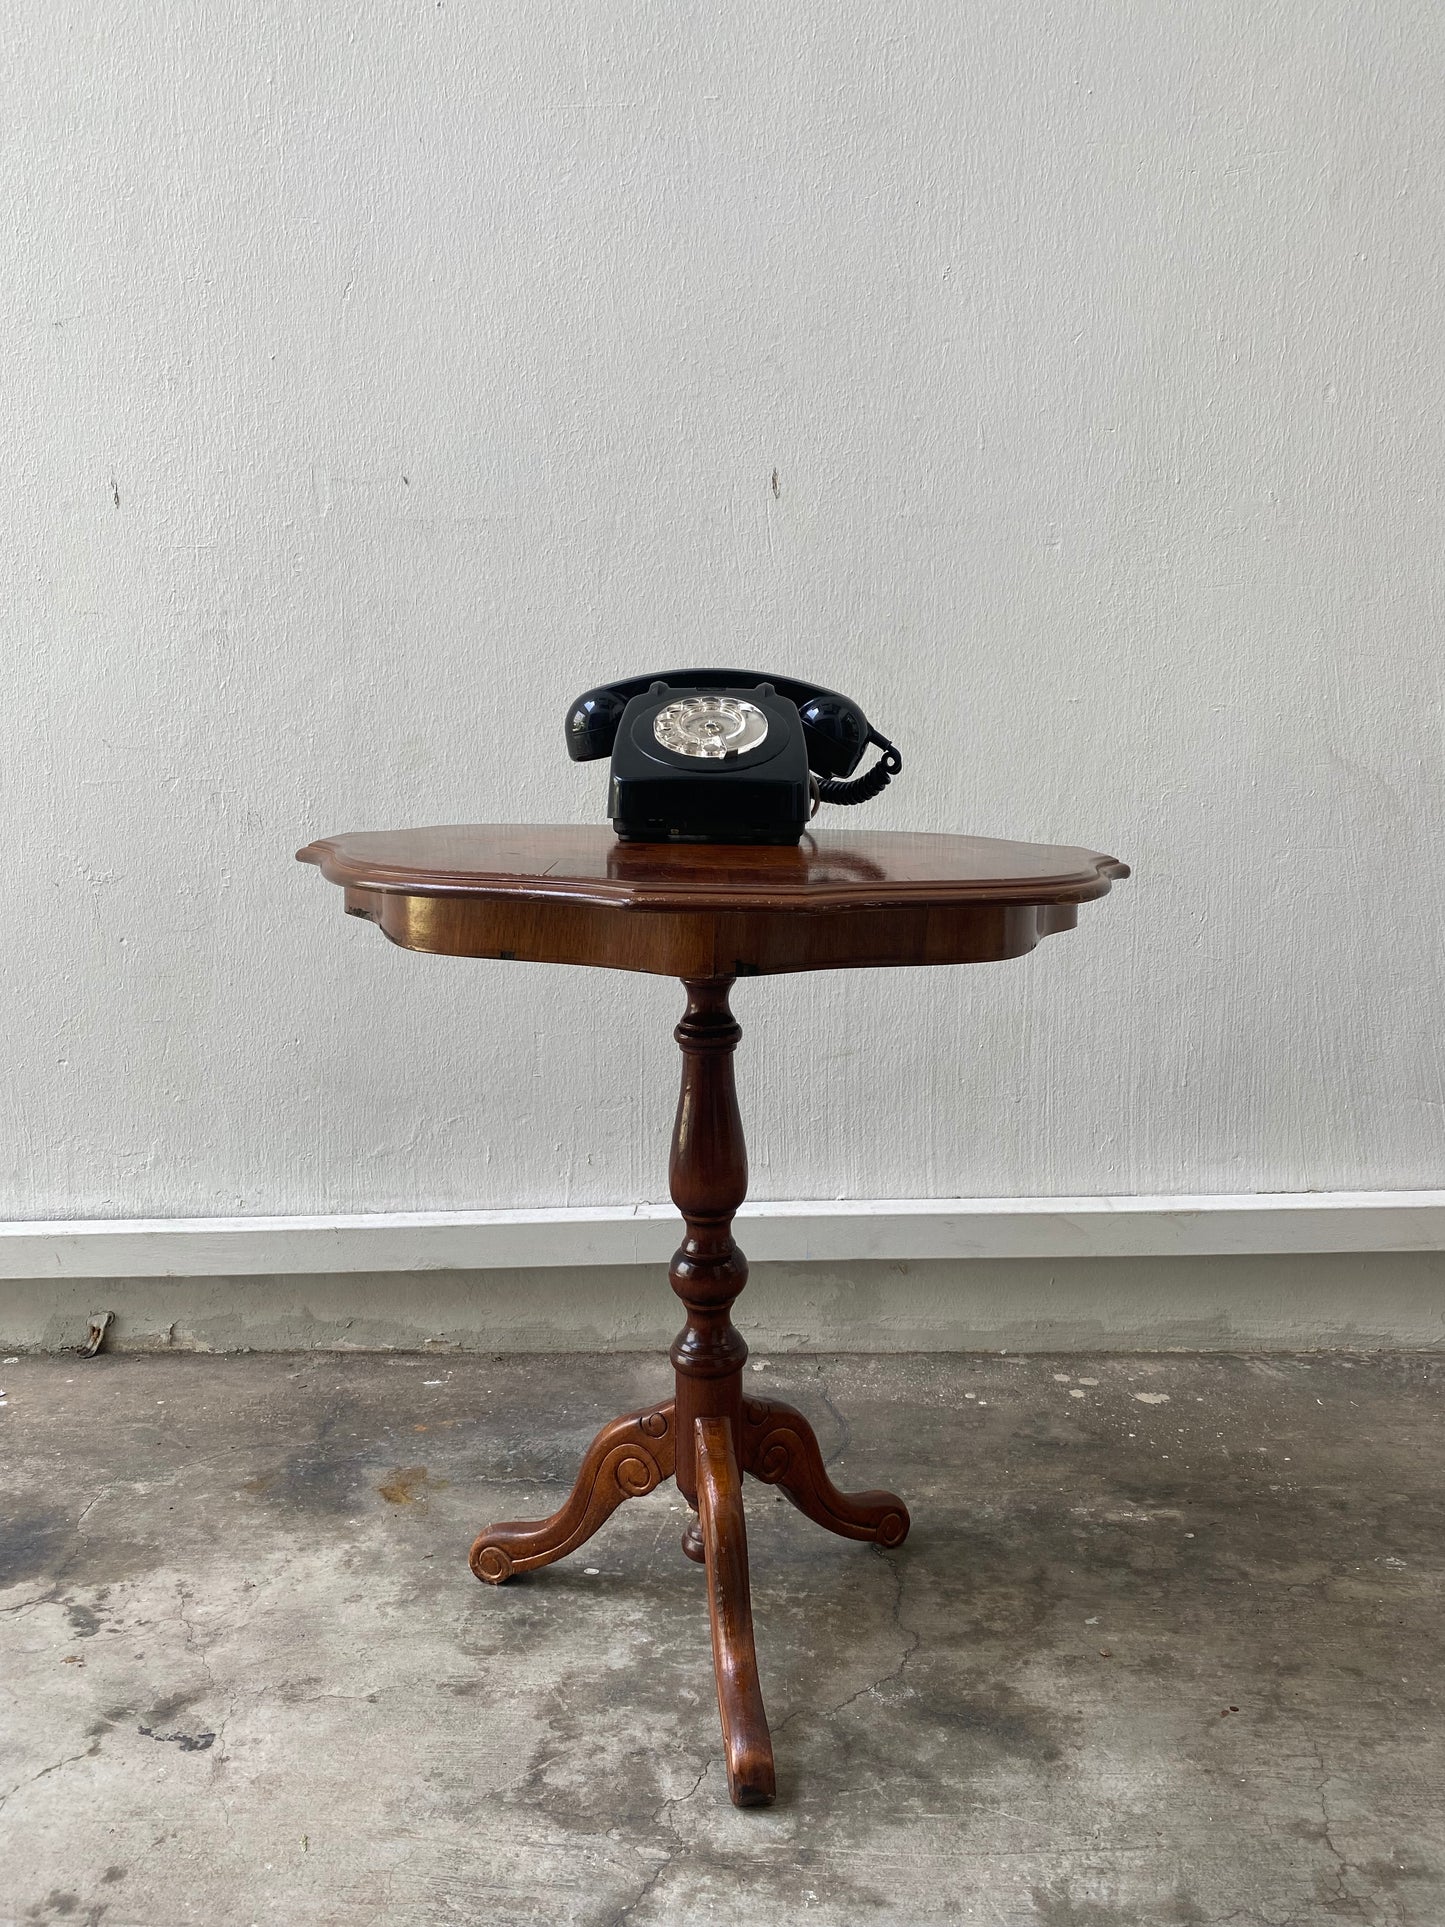 Vintage Bakelite Dial face Telephone